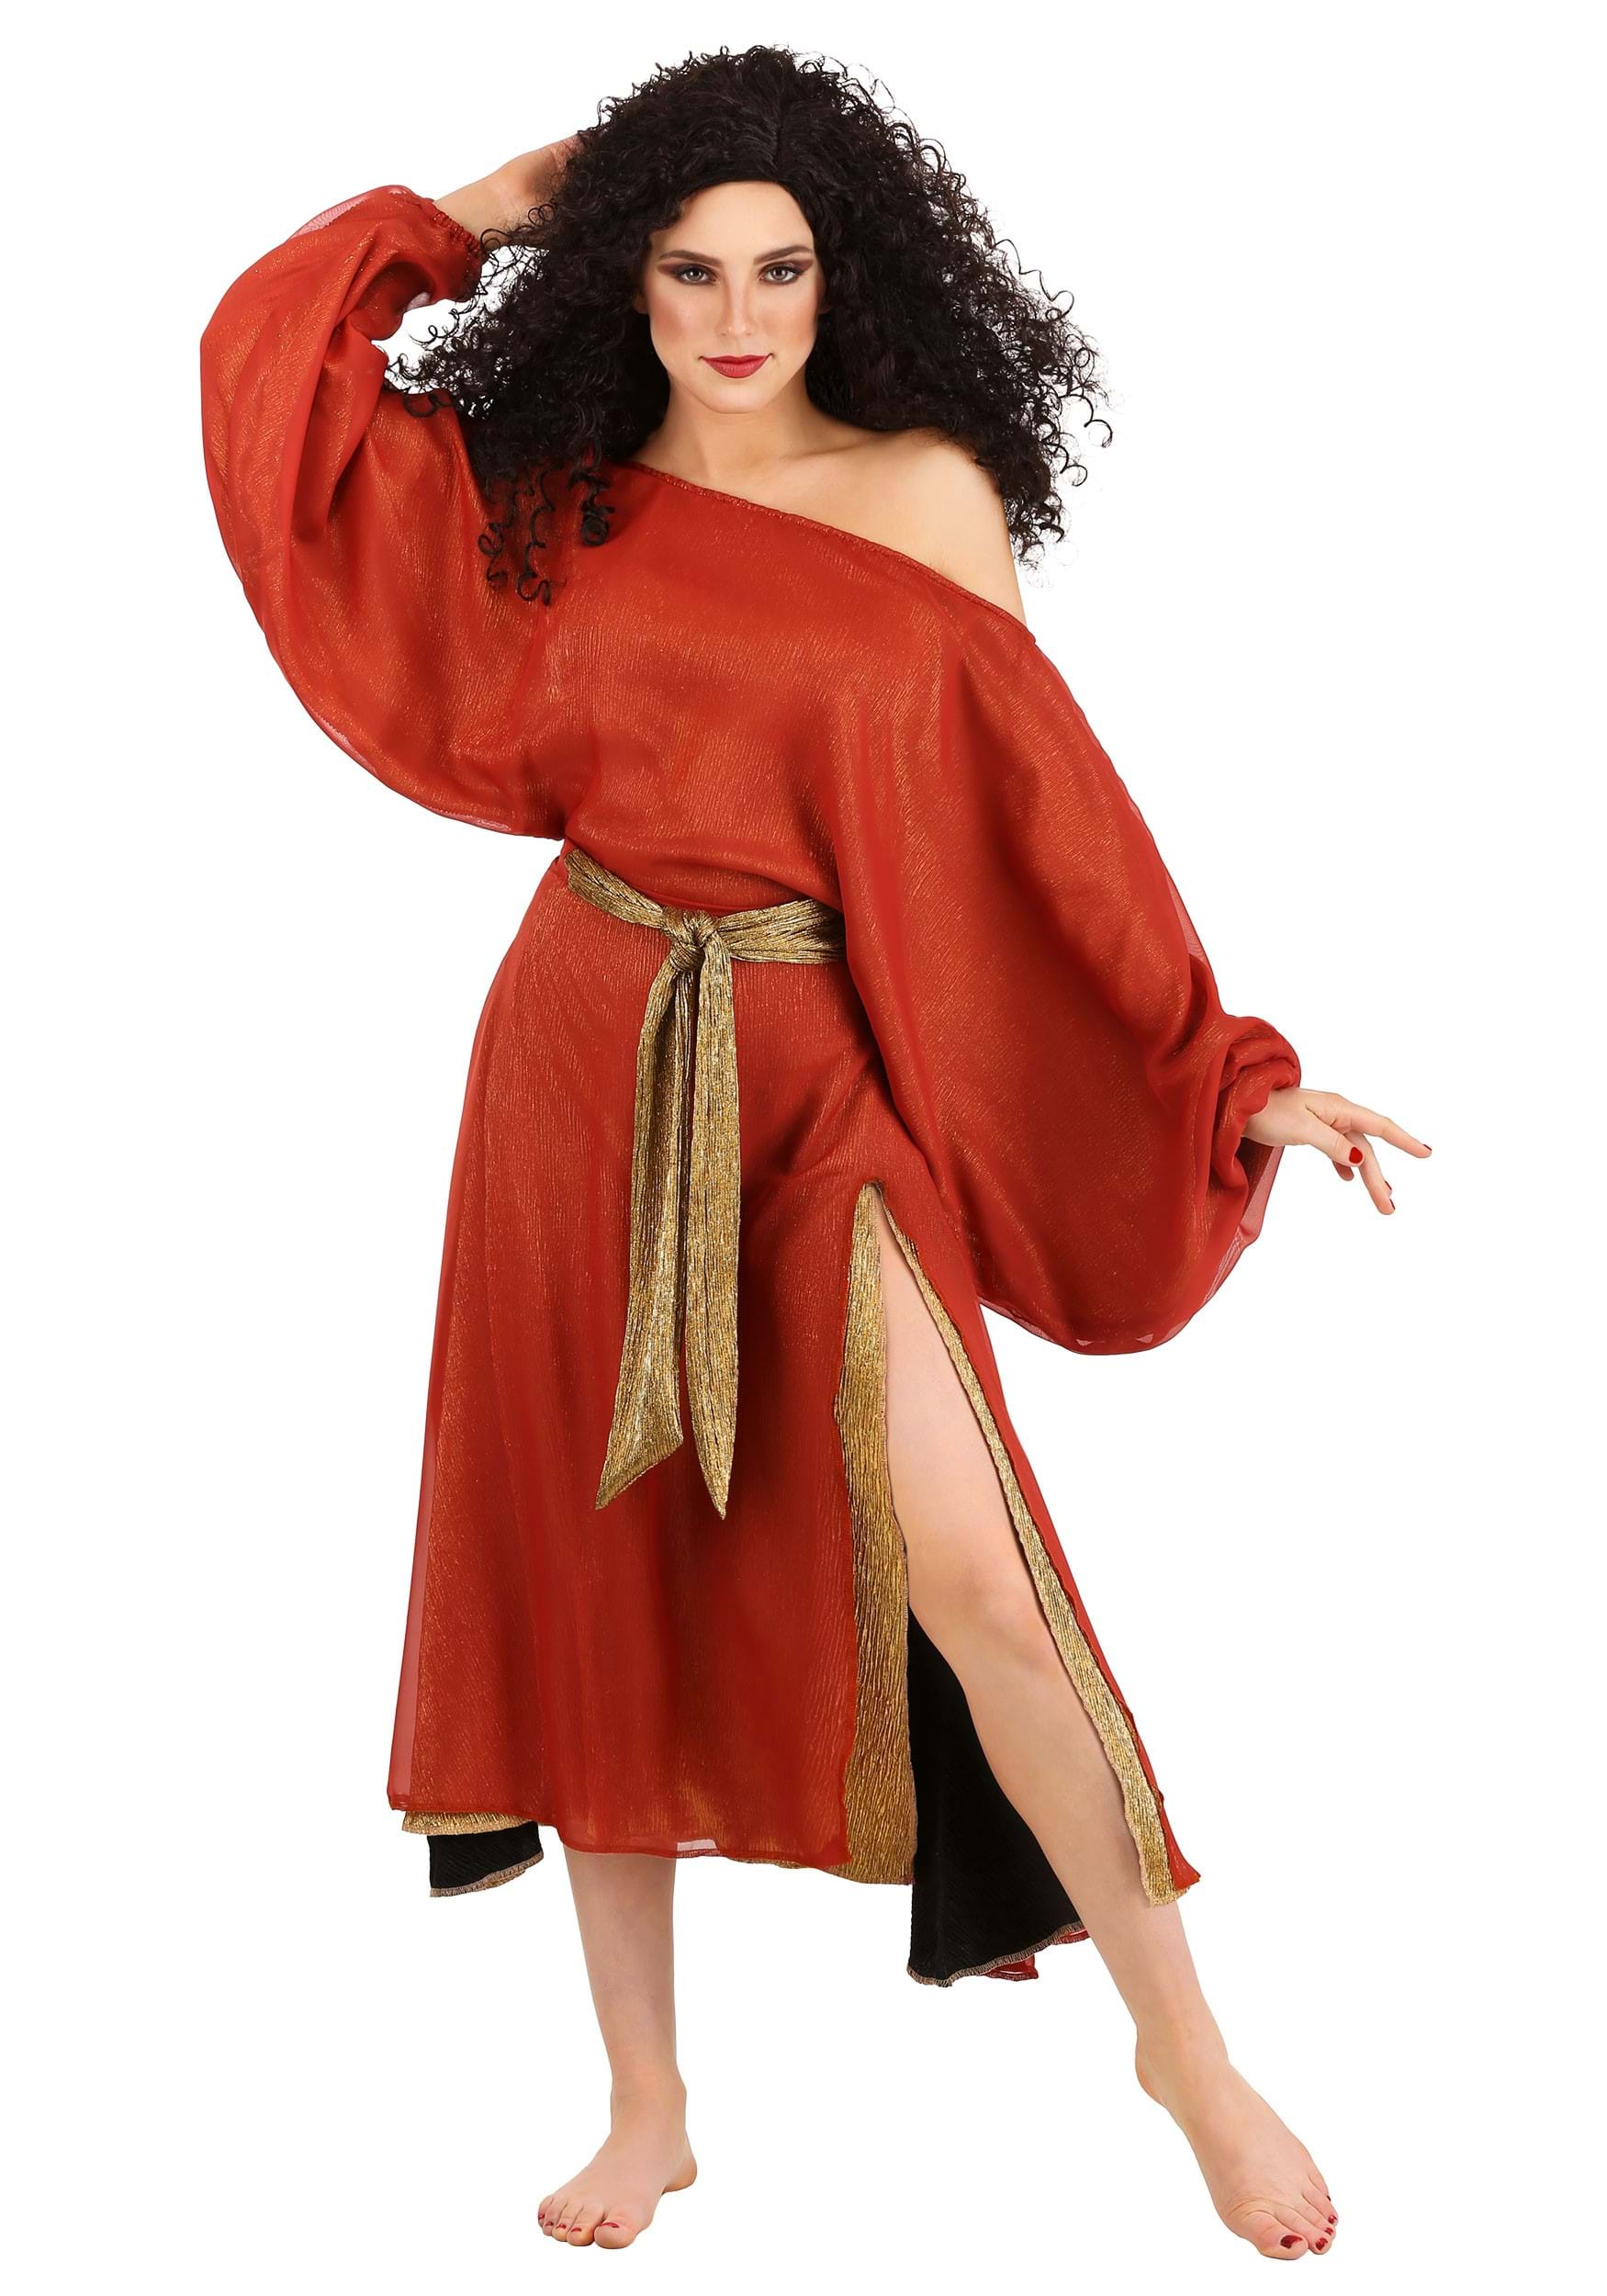 Photos - Fancy Dress Ghostbusters FUN Costumes  Zuul Women's  Costume Brown/Orang 